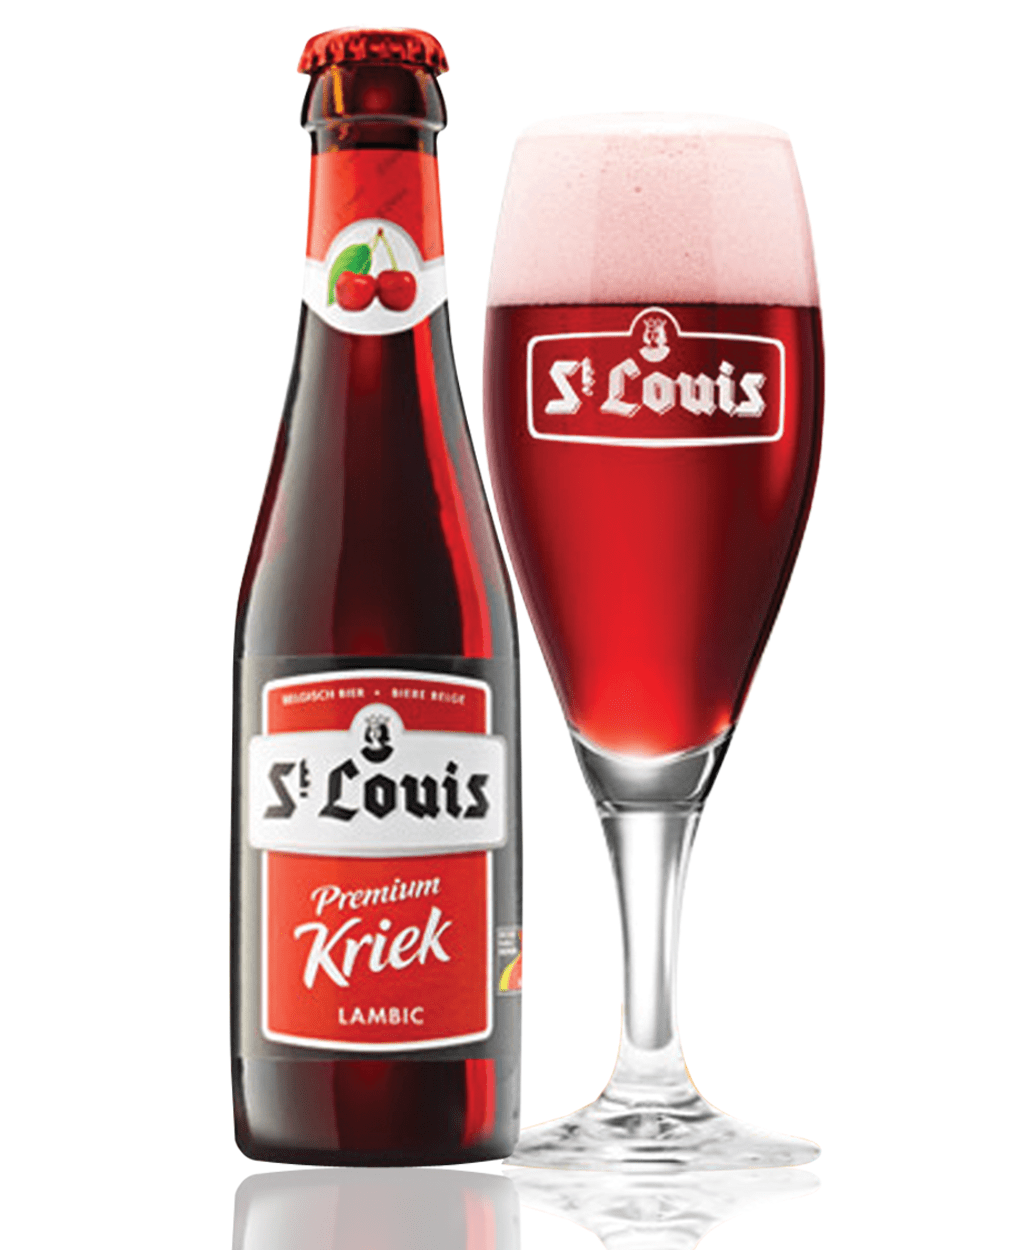 Bia St Louis Premium Kriek 3,2% chai 250ml